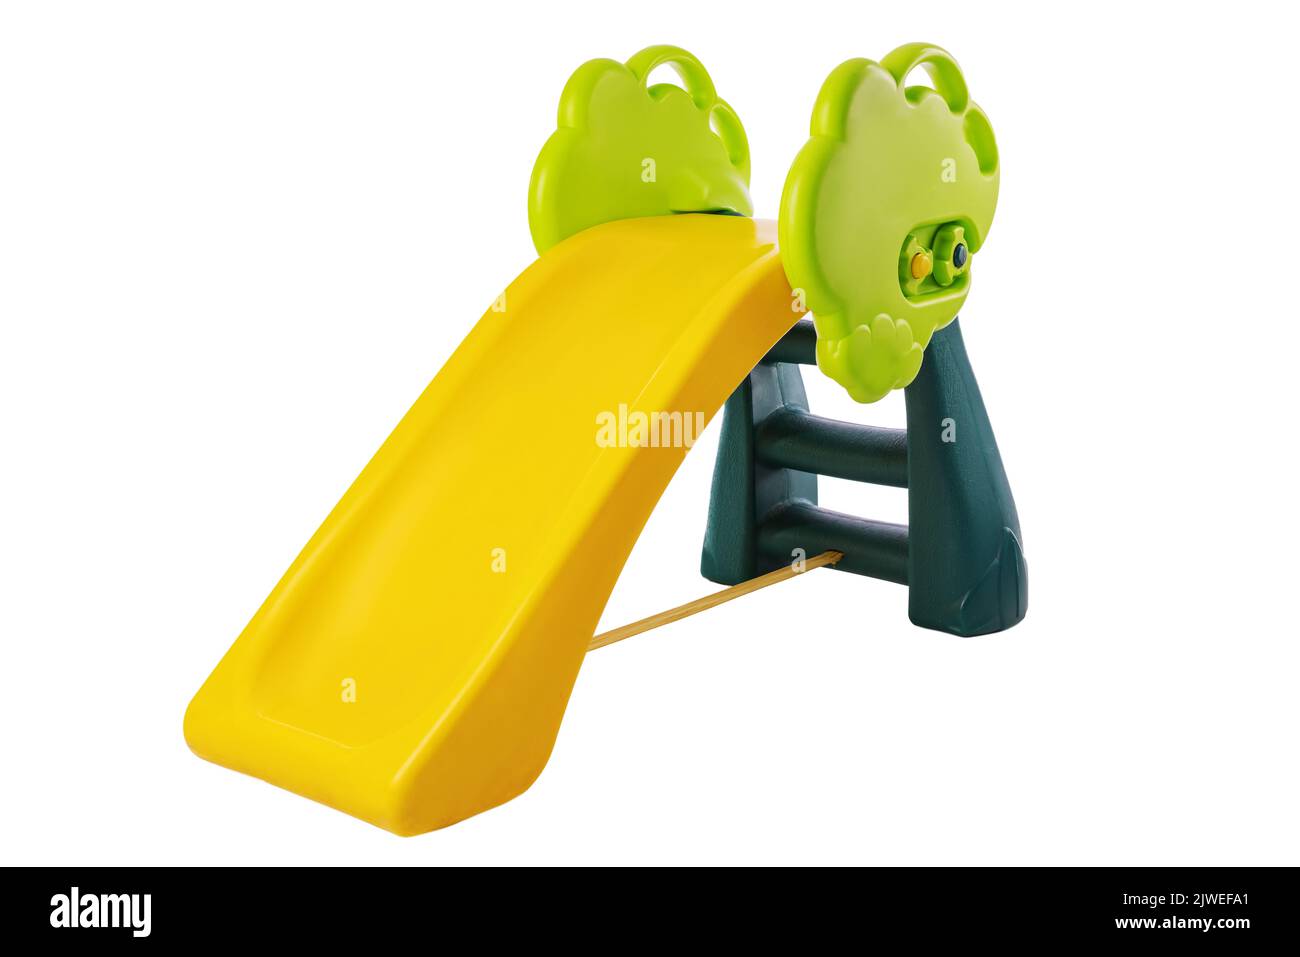 Slide for children playground isolated on white background Stock Photo